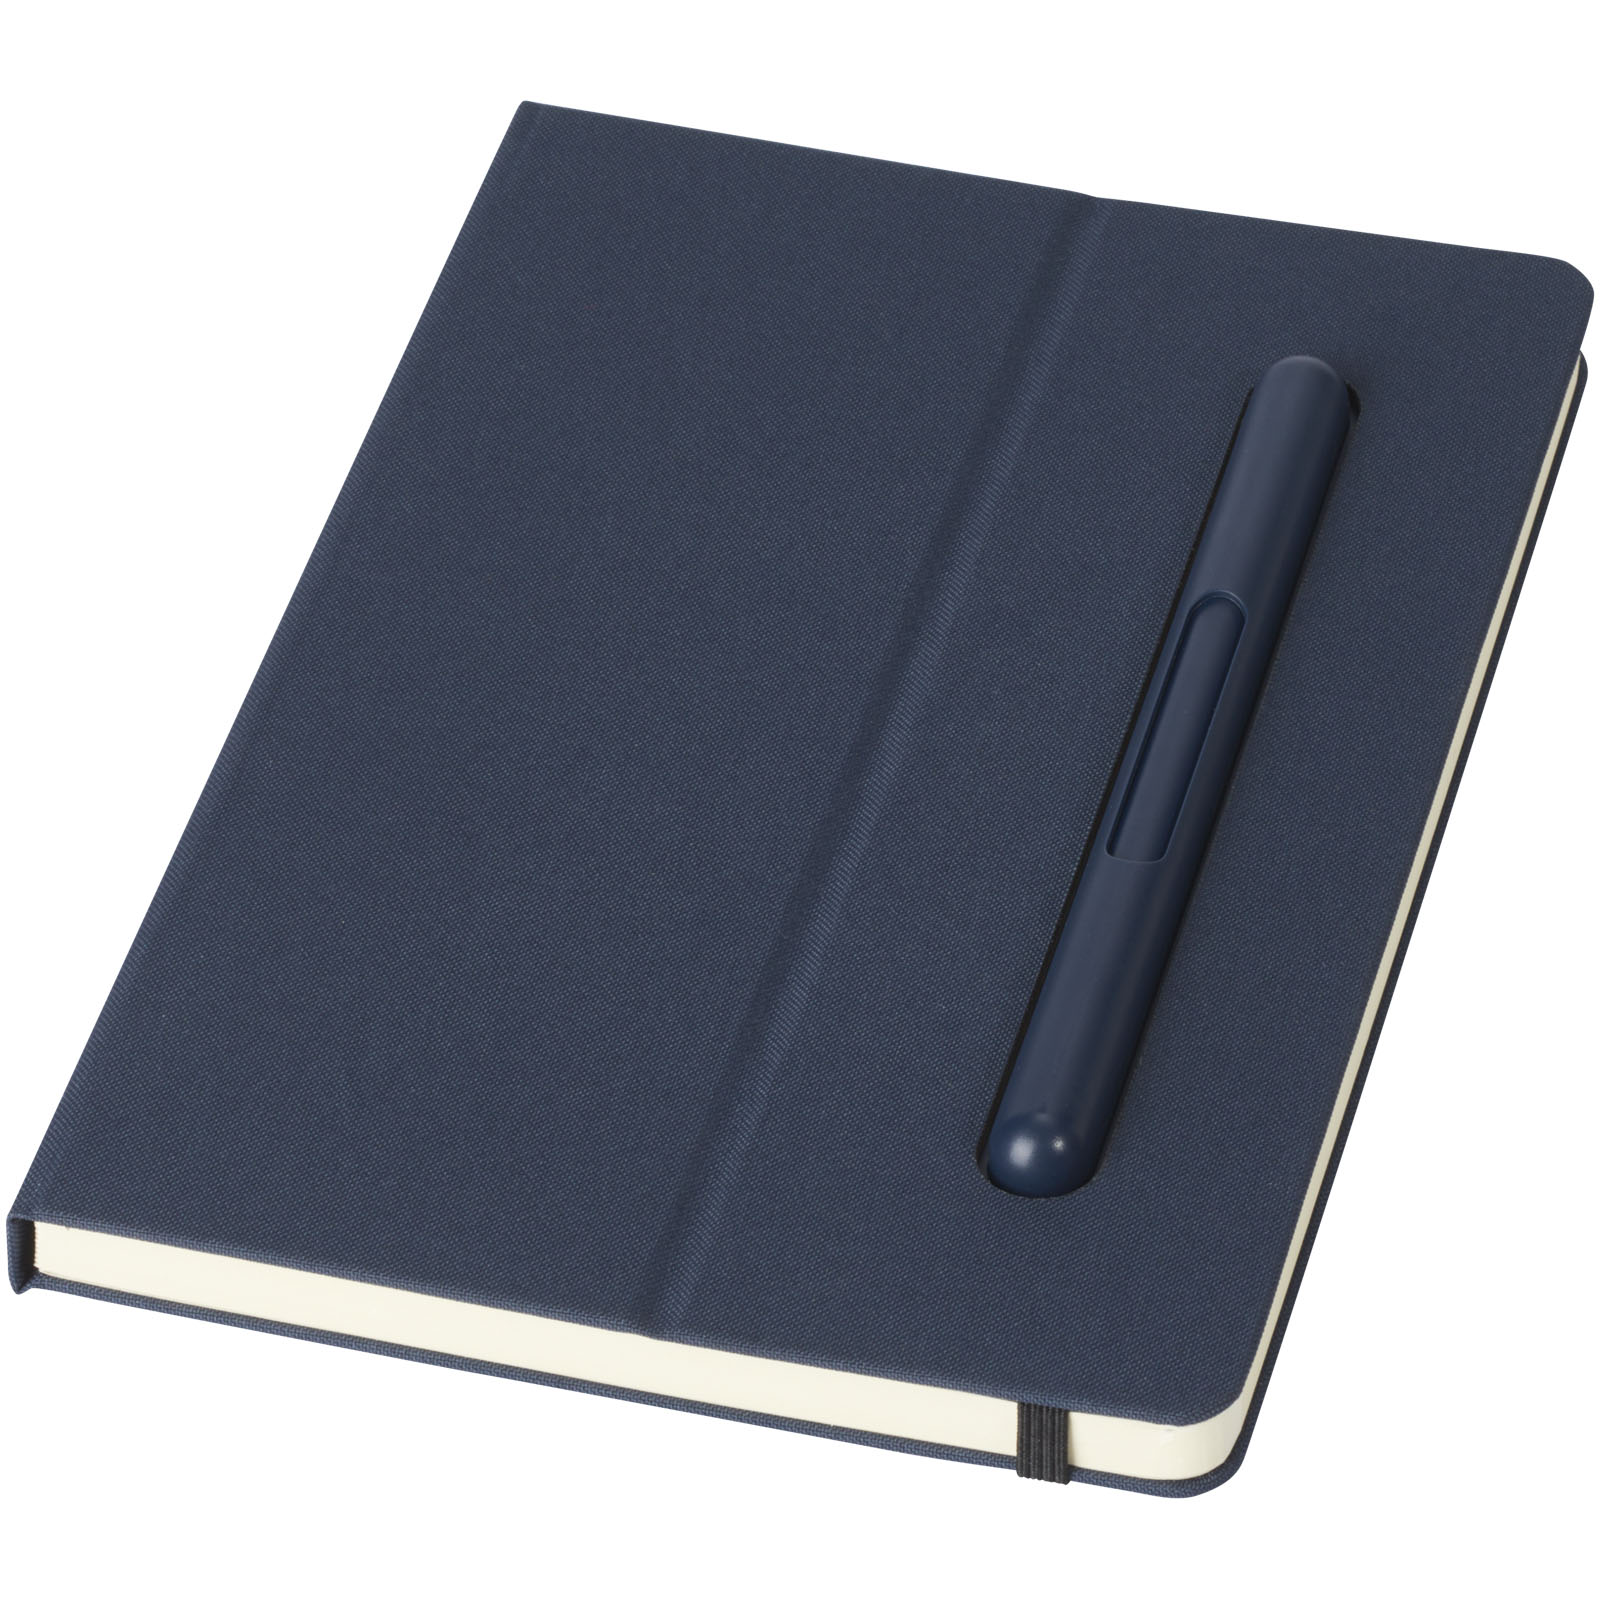 Notebooks & Desk Essentials - Skribo ballpoint pen and notebook set